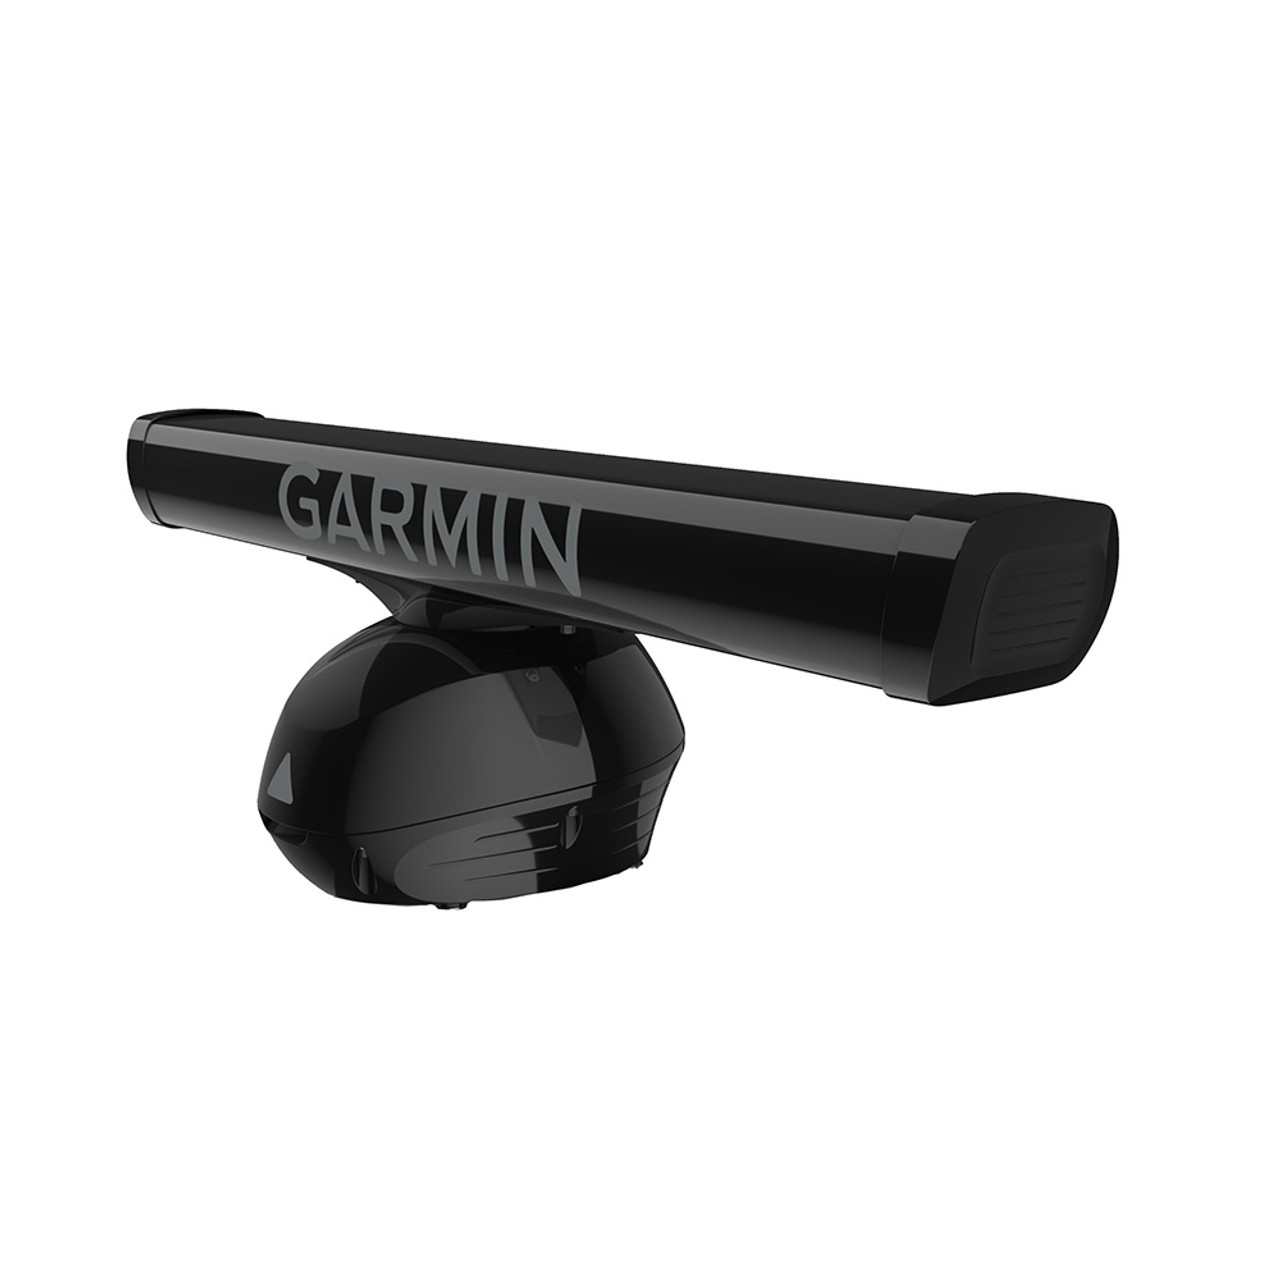 Garmin GMR Fantom 254 Radar - Black [K10-00012-34]